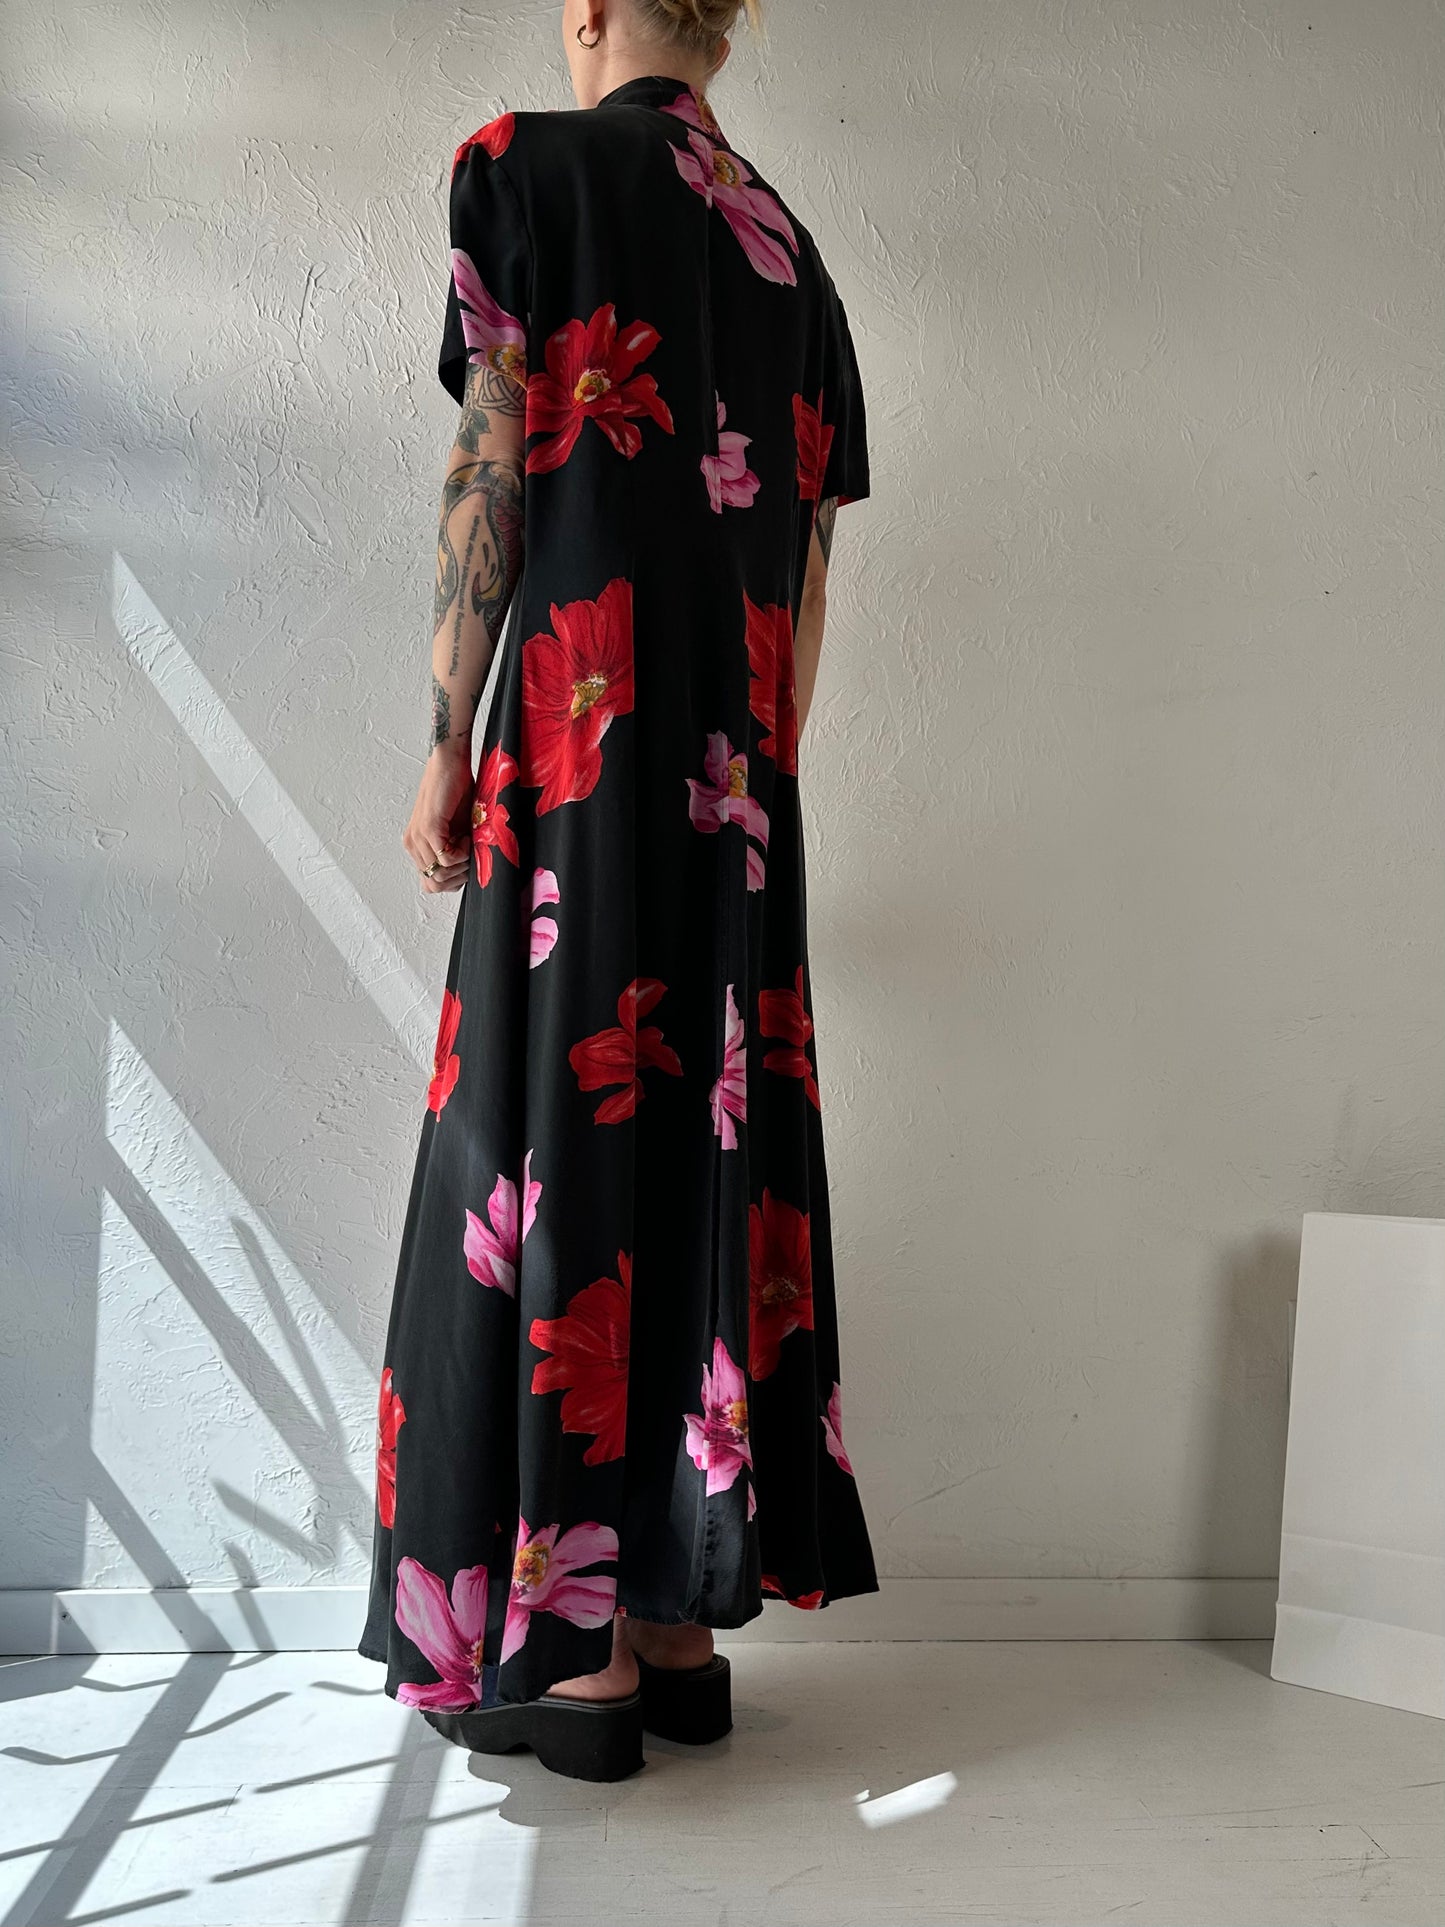 Y2k 'Jack Mulqueen' Silk Floral Maxi Dress / Large